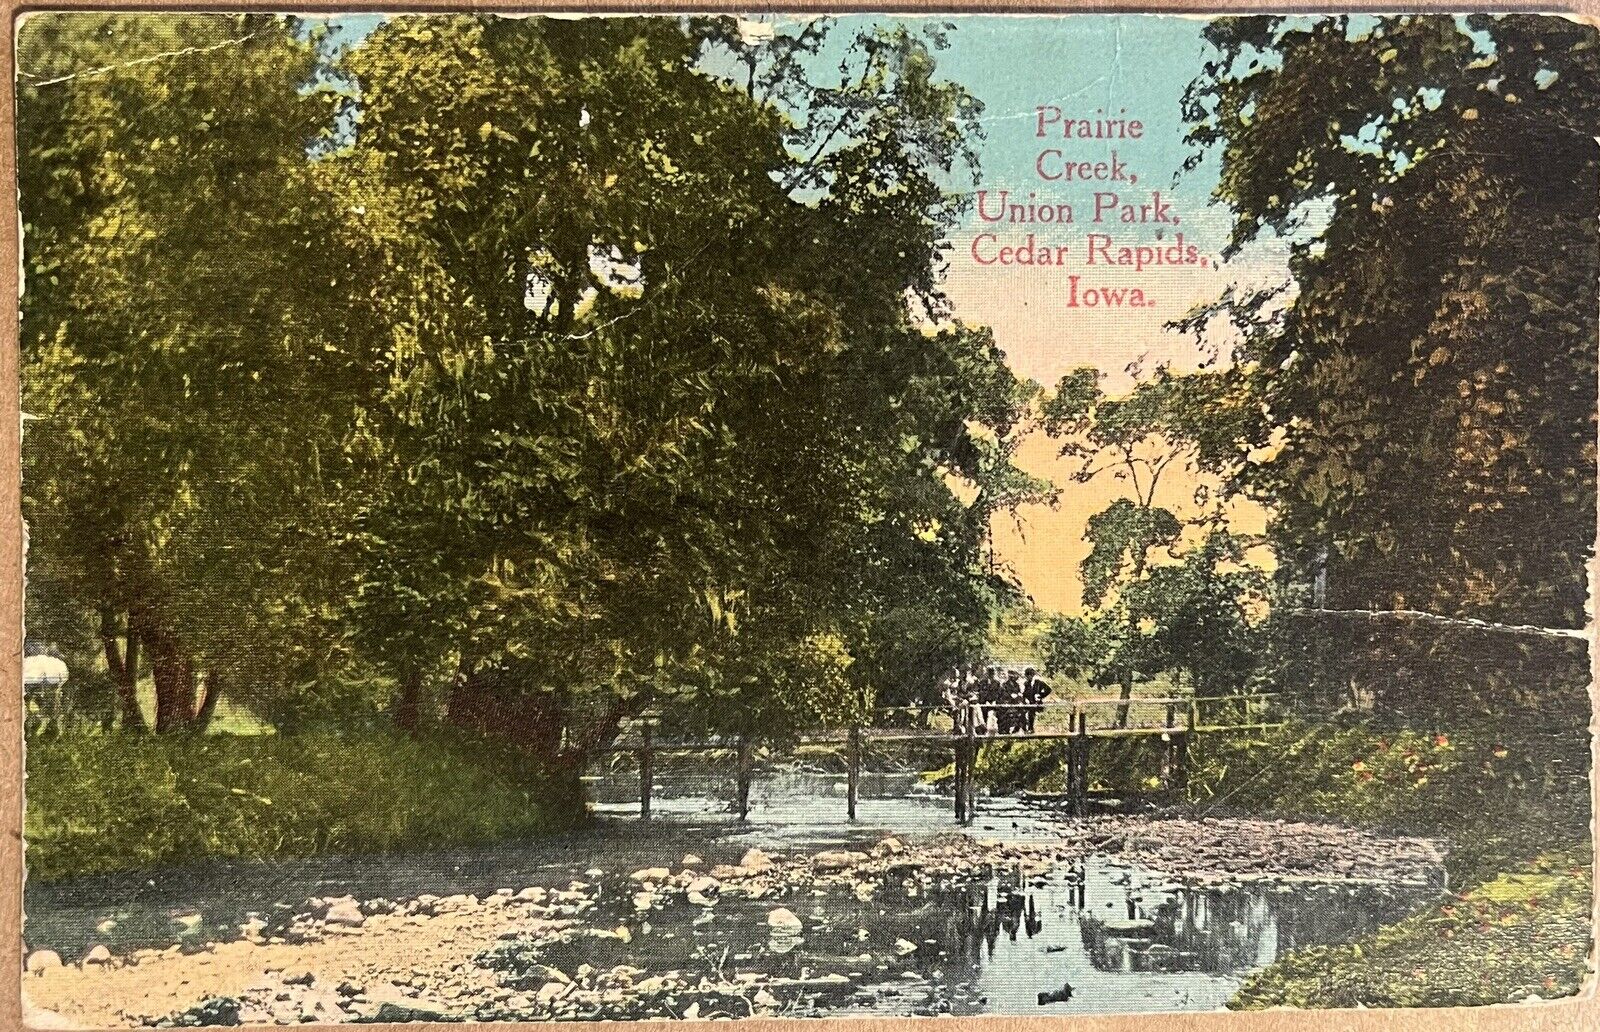 Cedar Rapids Iowa Union Park Prairie Creek People on Bridge VTG Postcard c1910